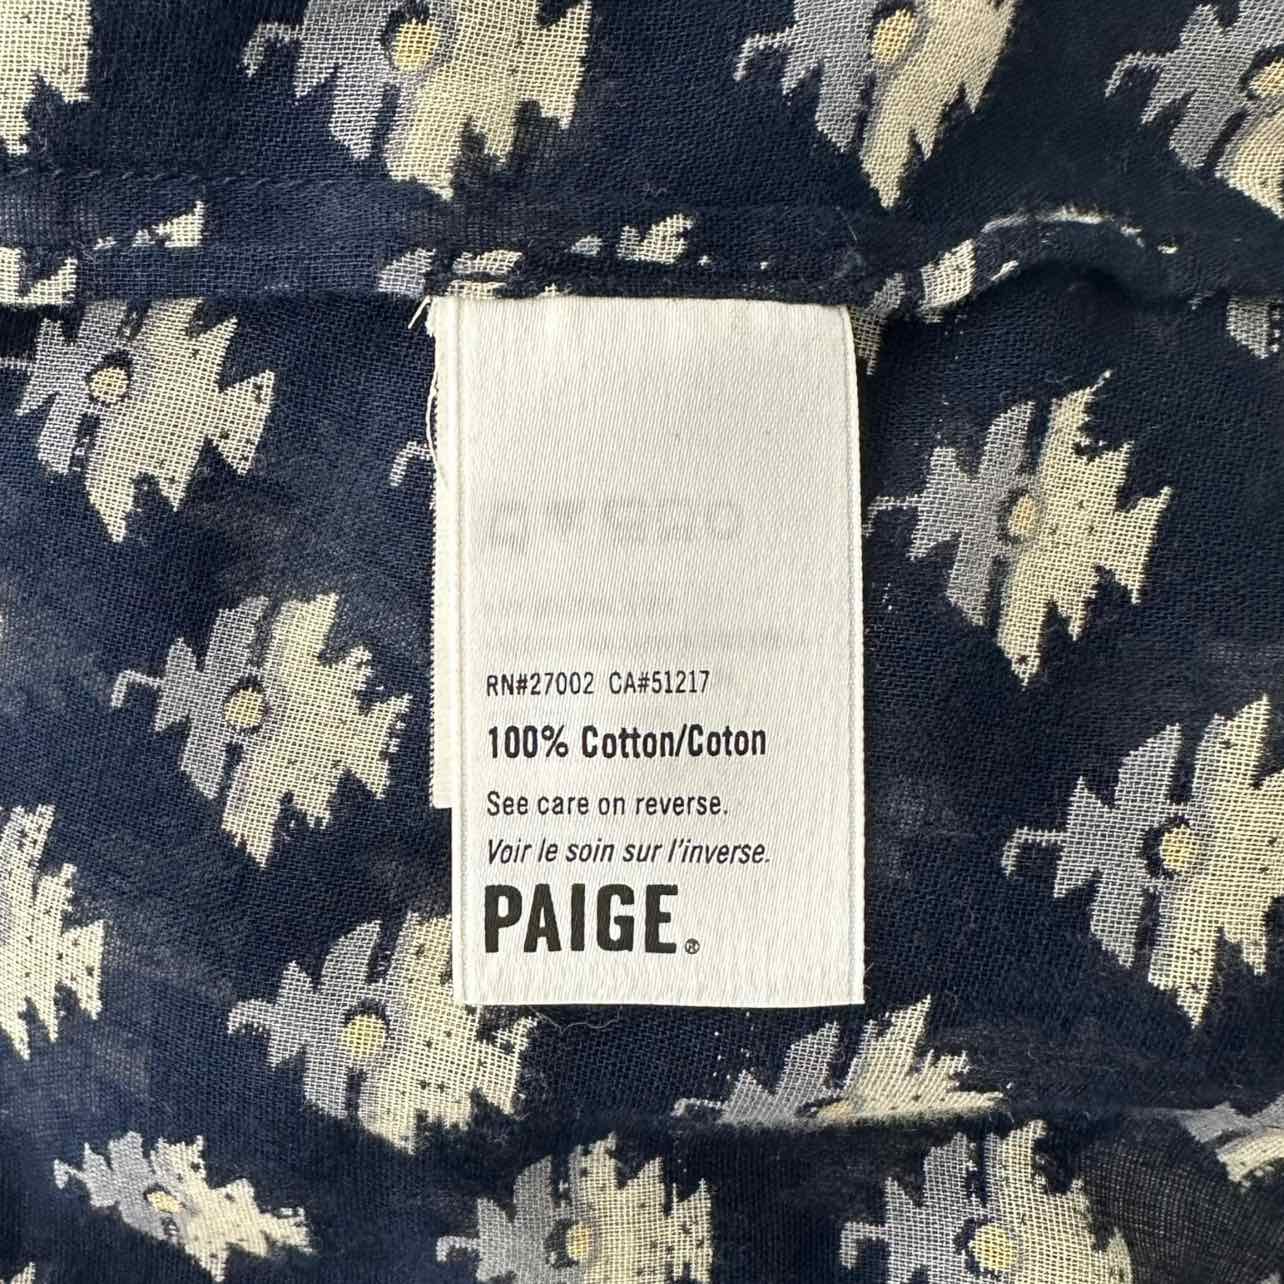 Paige Navy Print Top Size M